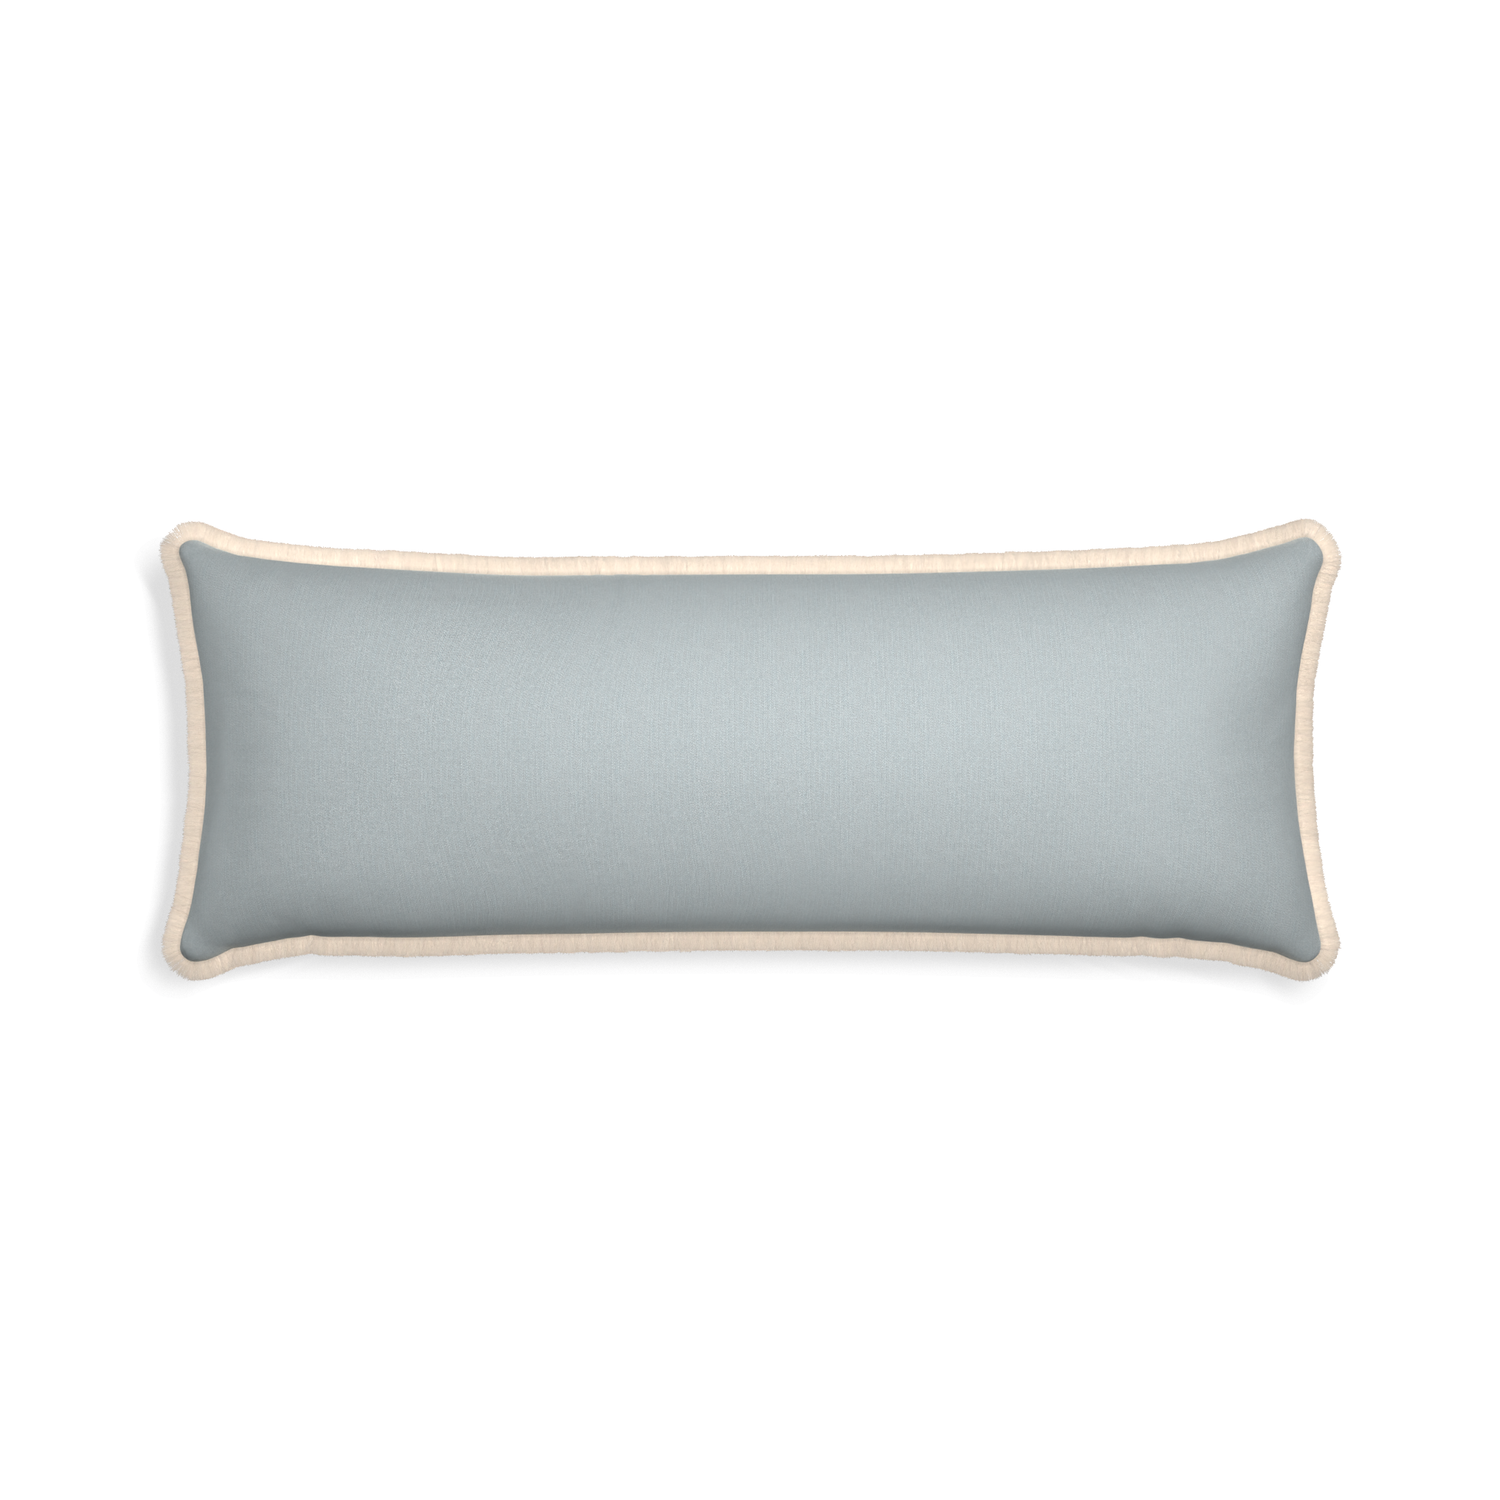 Xl-lumbar sea custom grey bluepillow with cream fringe on white background